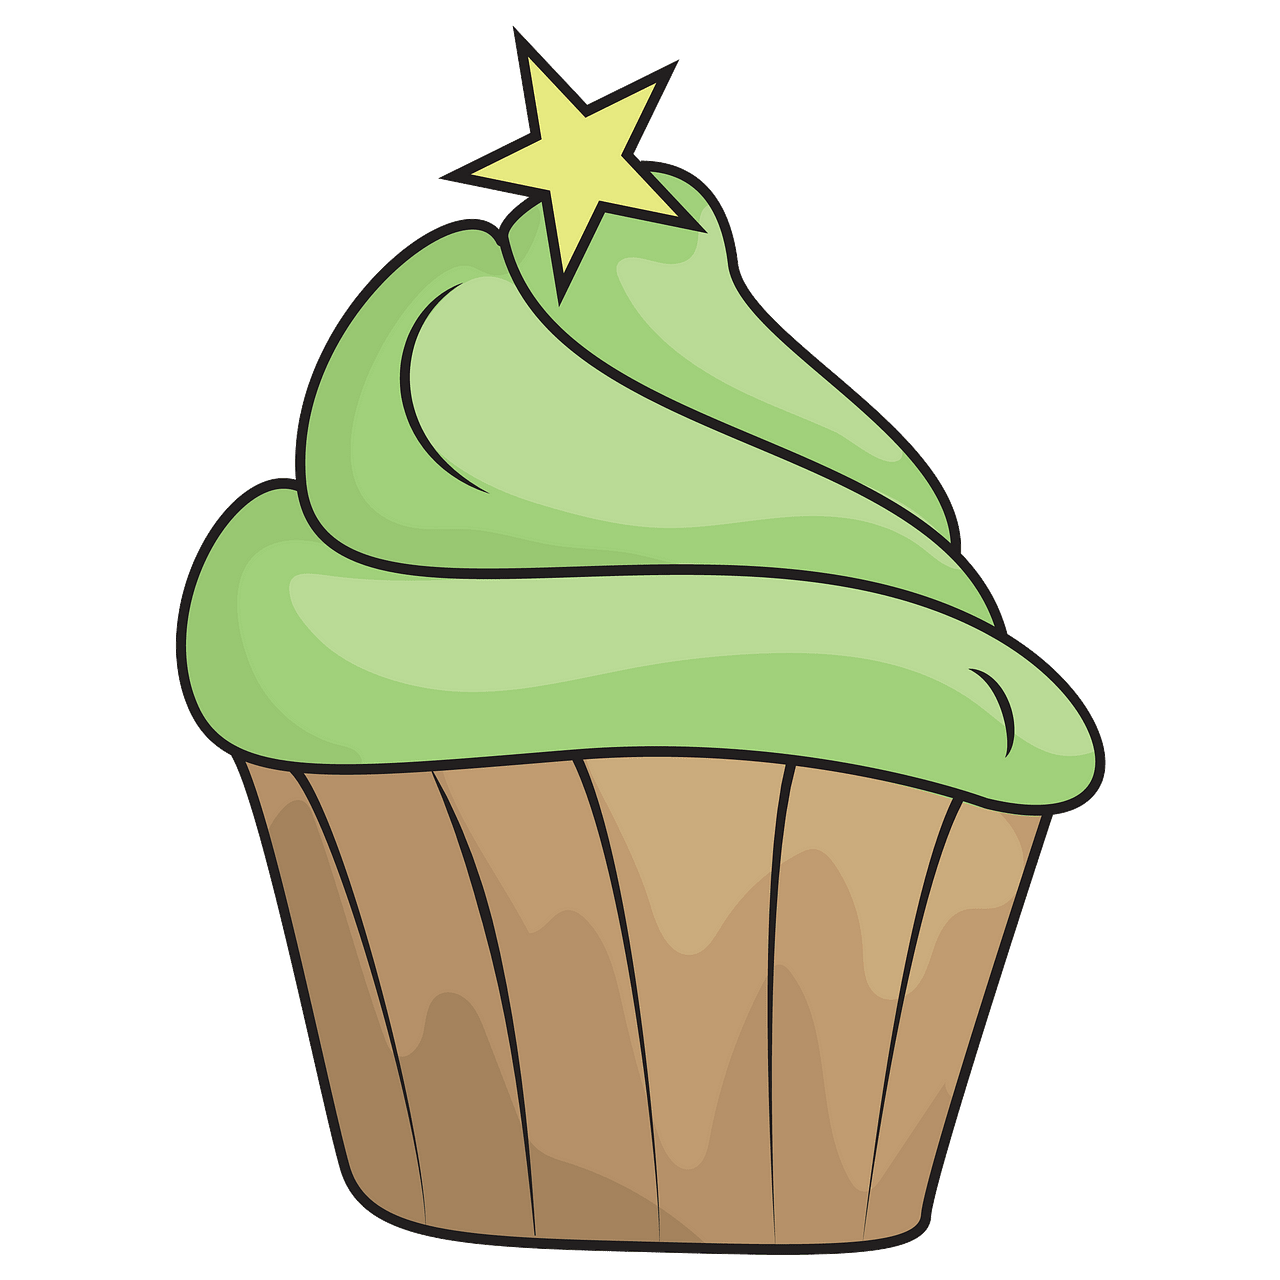 Green cupcake clipart